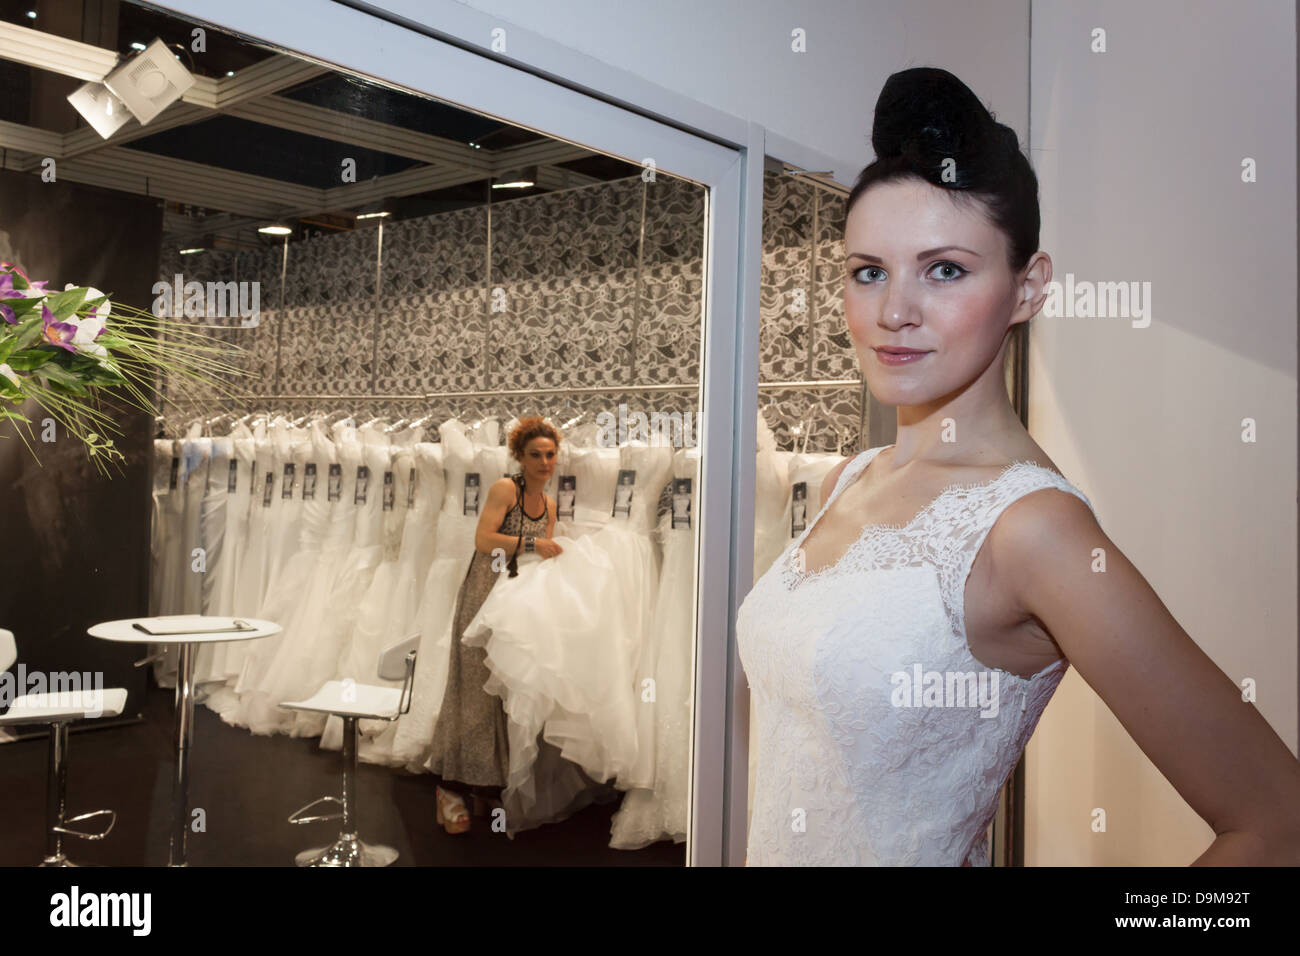 Milan, Italy - June 21, 2013: People visit SposaItalia, international exhibition of bridal and formal wear in Milan. Stock Photo